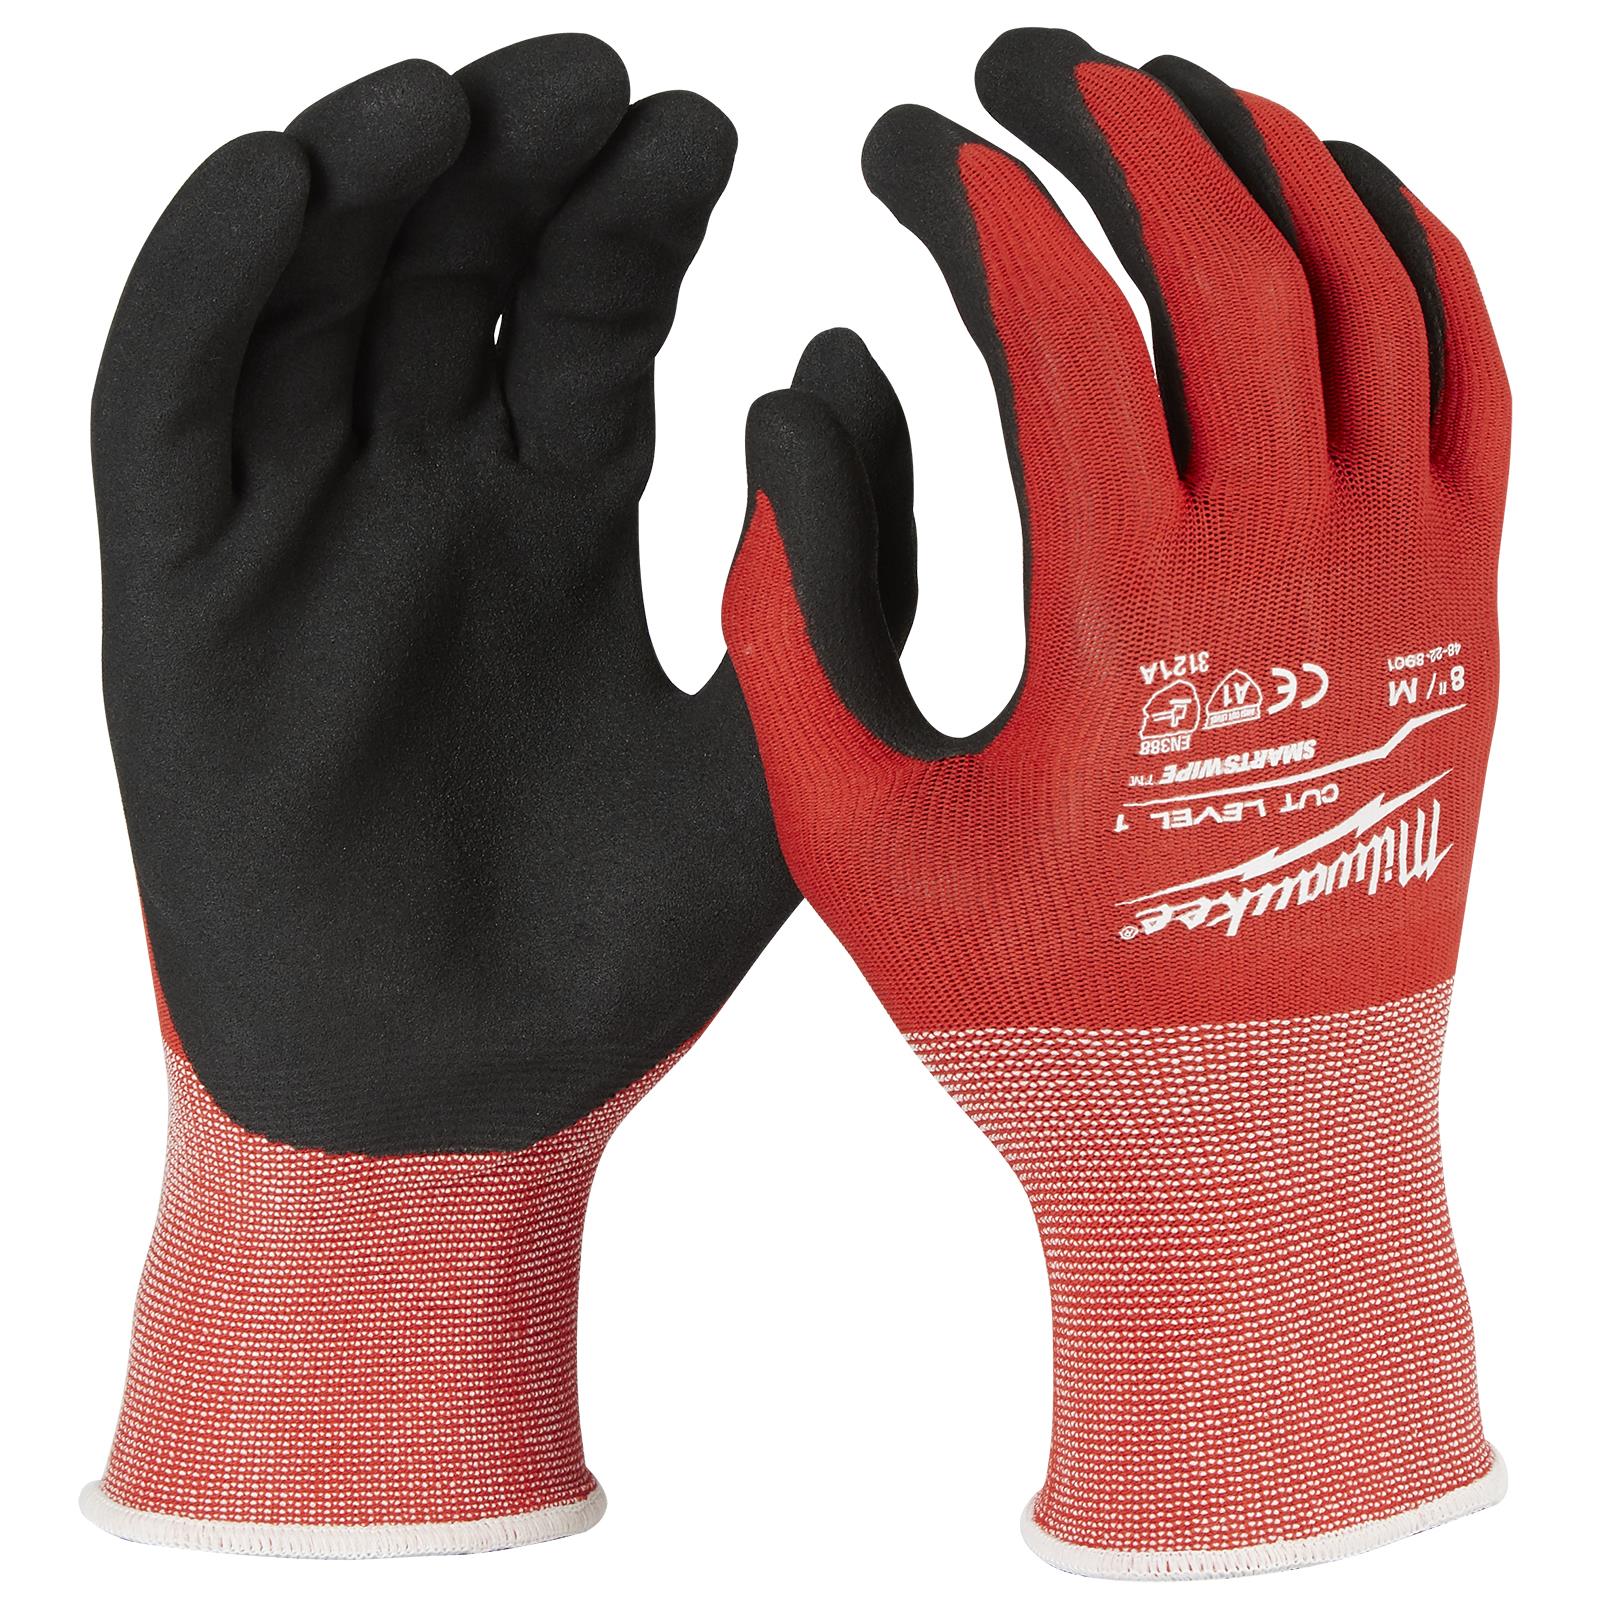 Milwaukee Safety Gloves Cut Level 1/A Dipped Glove Size 8 / M Medium